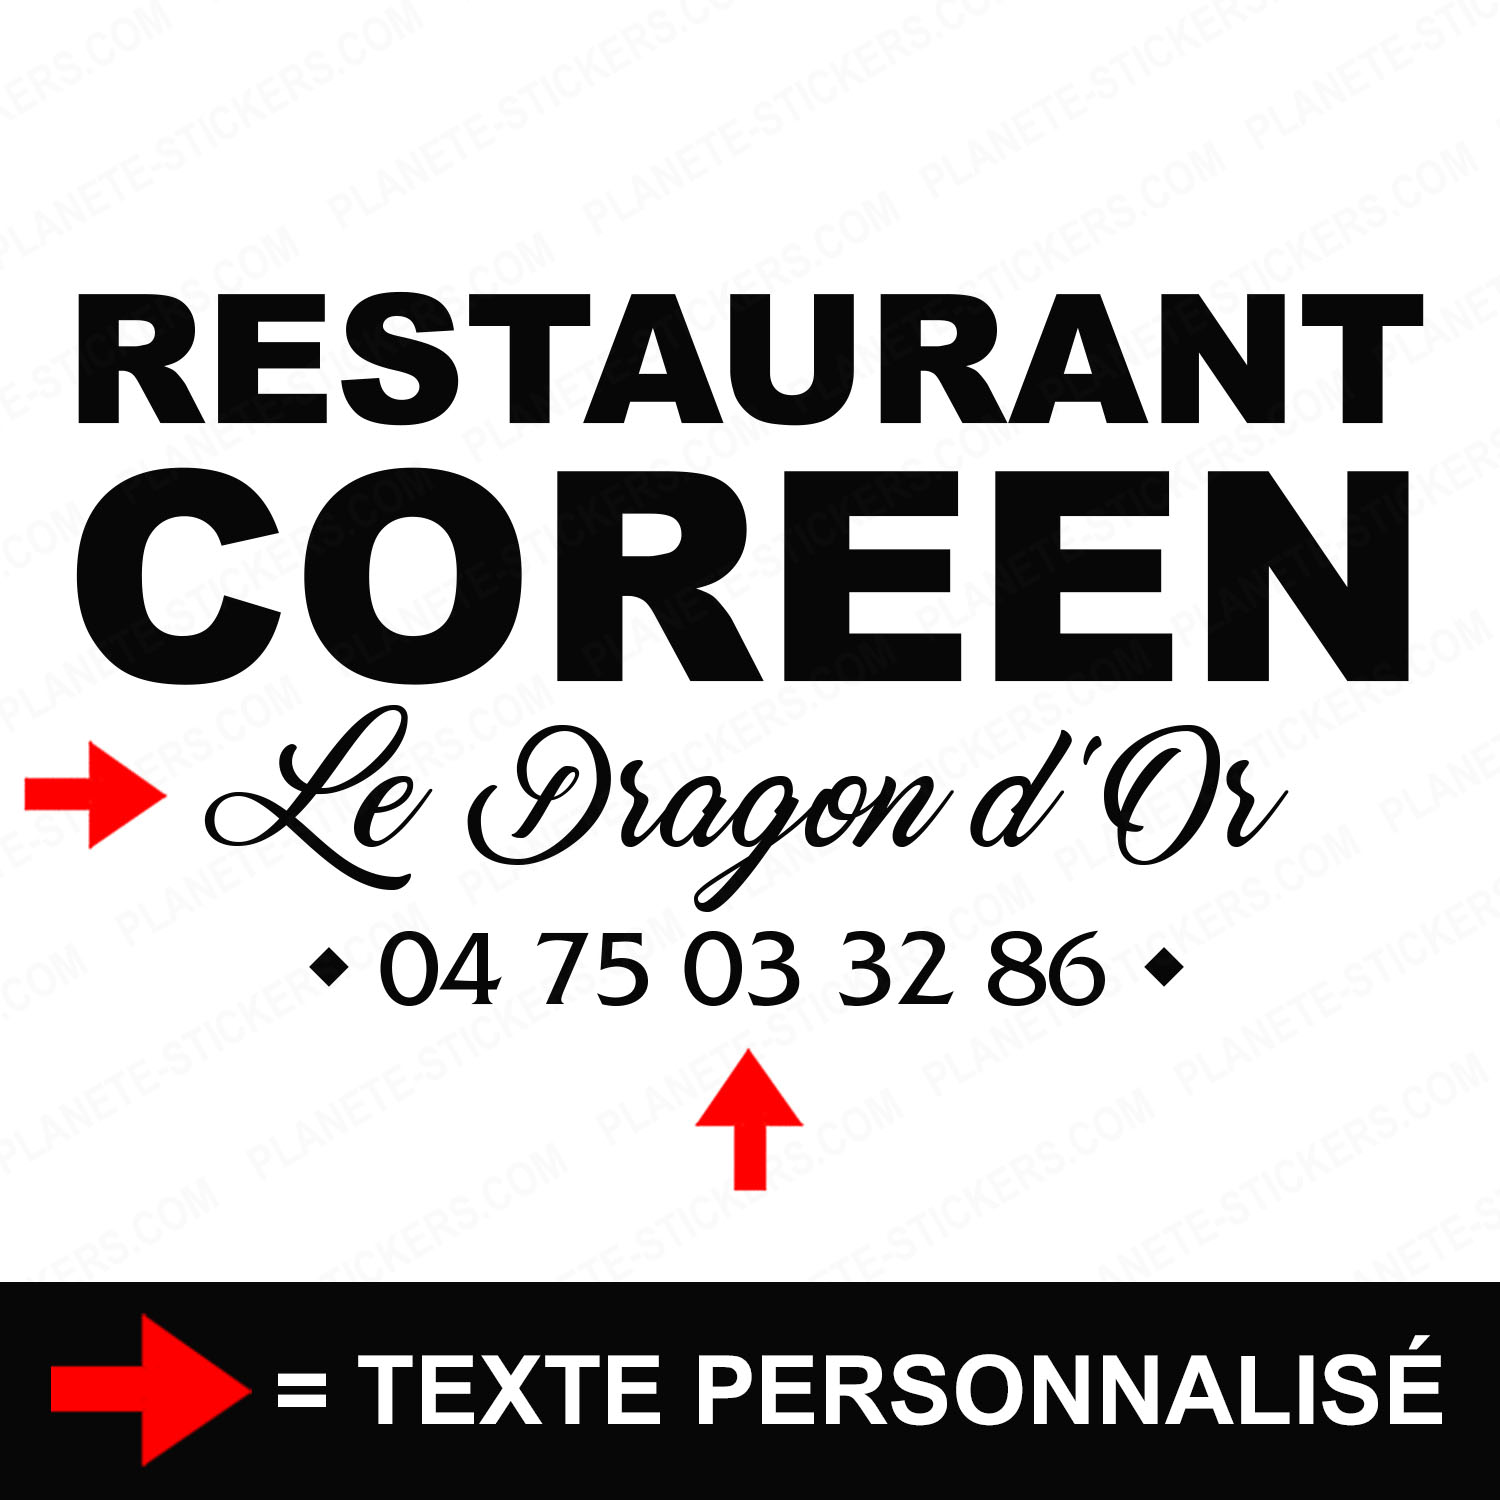 ref35restaurantvitrine-stickers-restaurant-coreen-vitrine-restaurant-sticker-personnalisé-autocollant-pro-restaurateur-vitre-resto-professionnel-logo-personnalisable-2